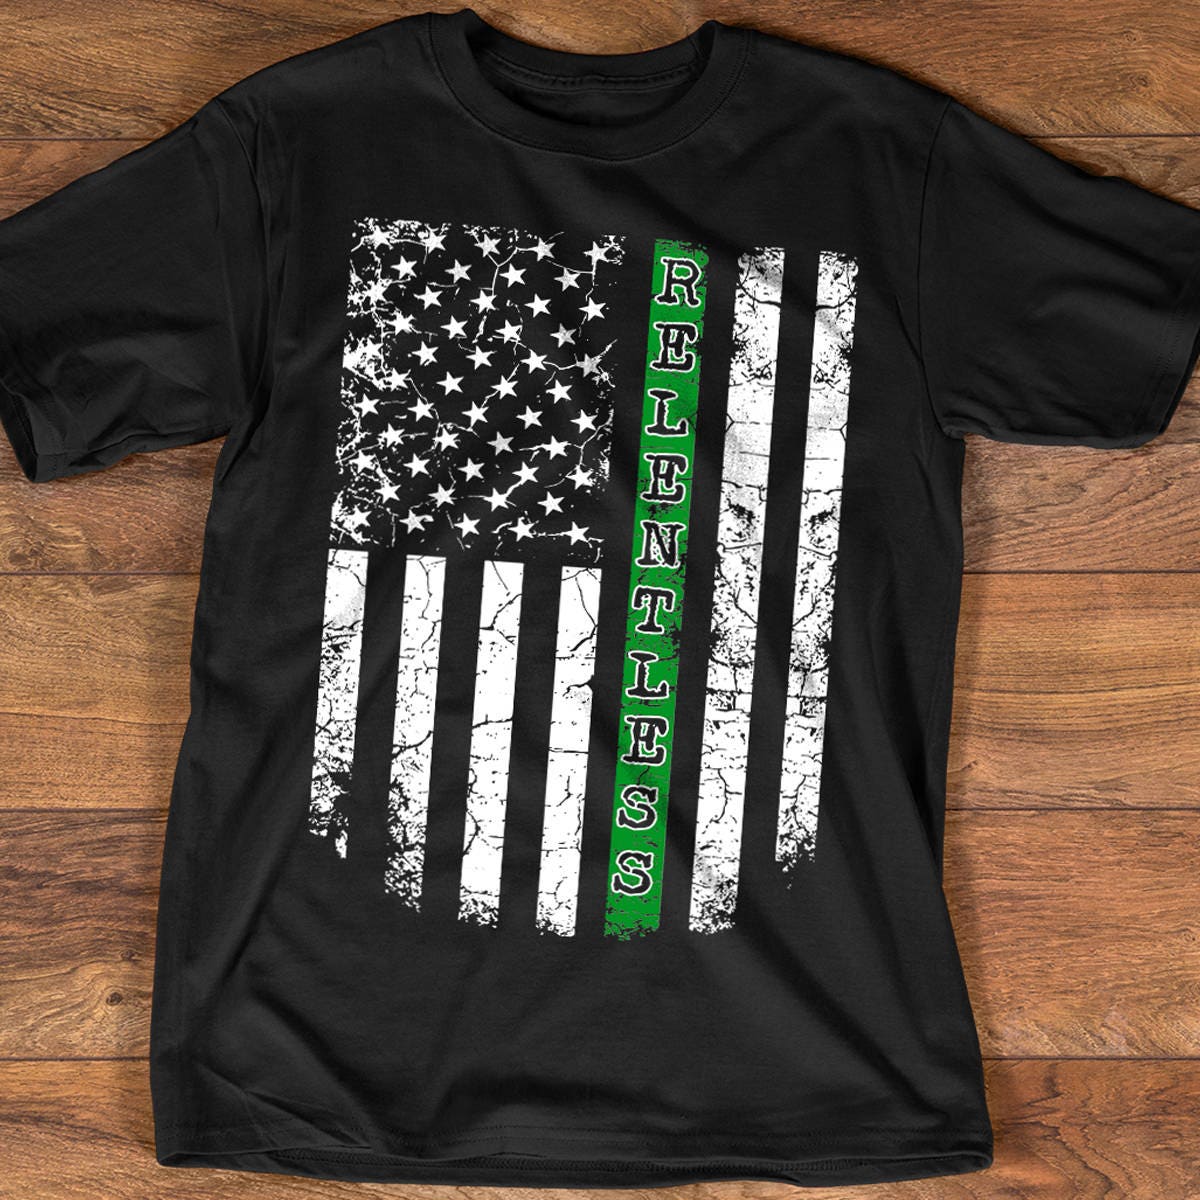 USA flag distressed America Veteran style tee shirt men's black choose A size 